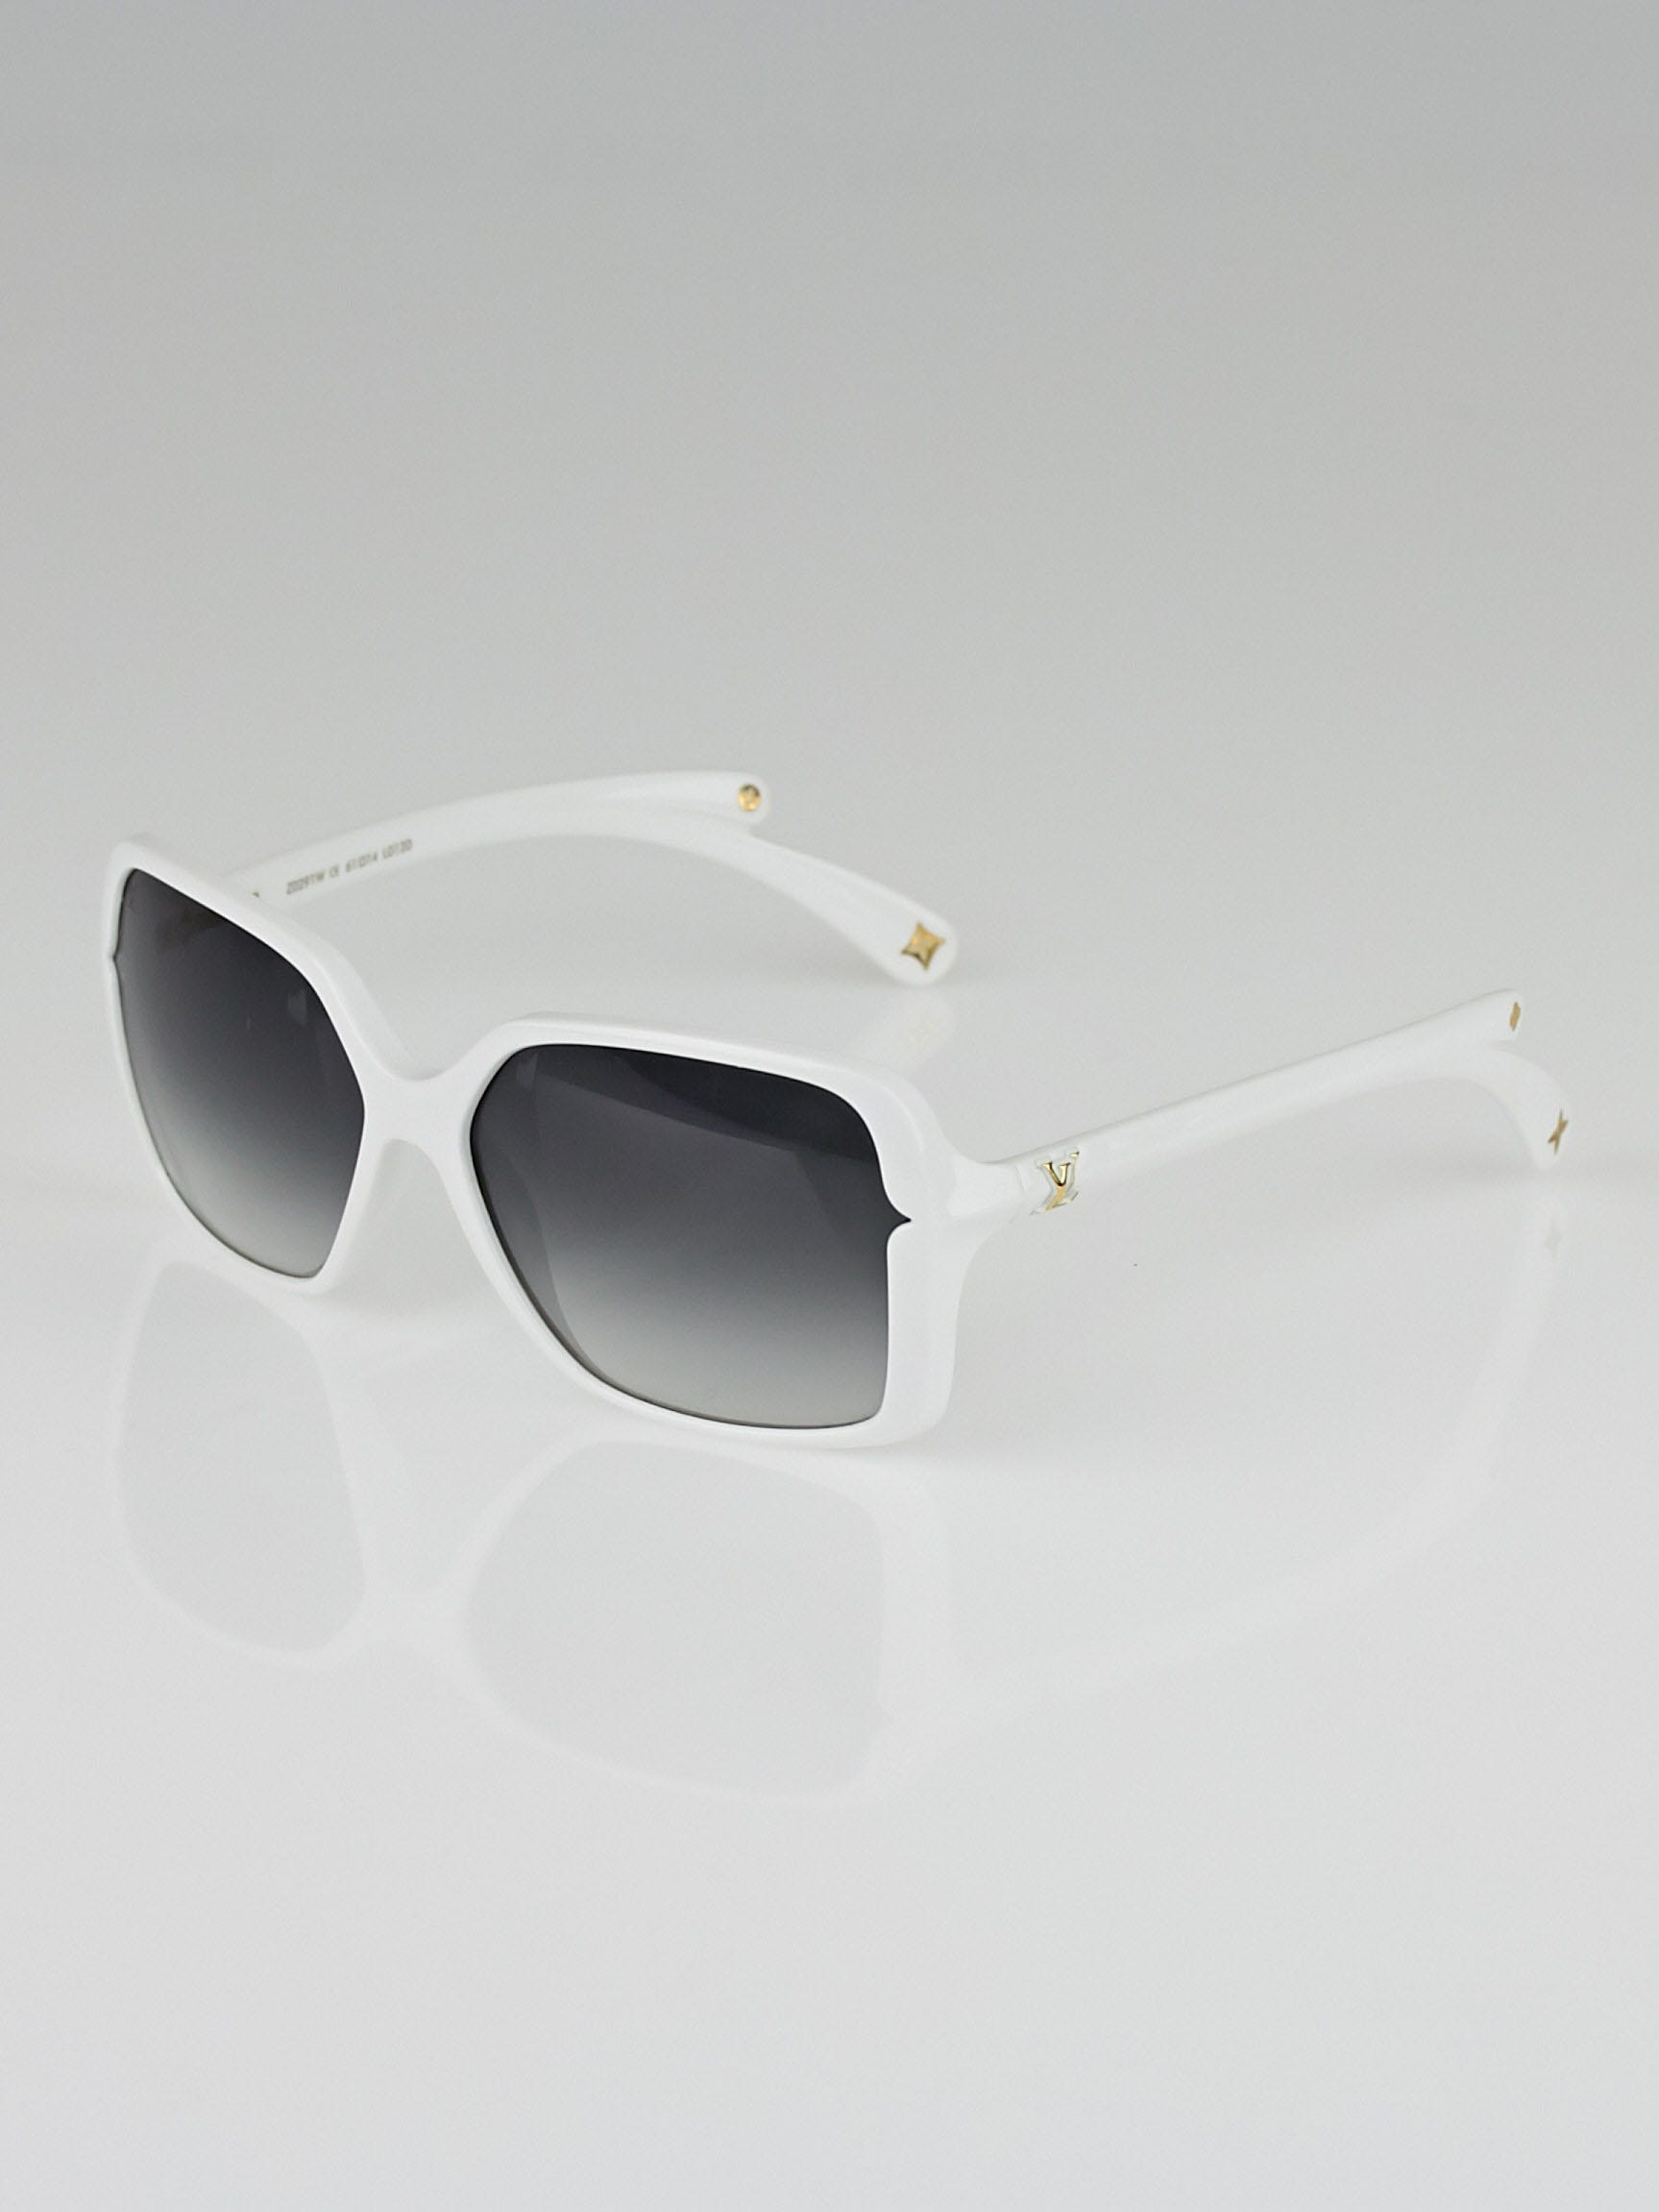 louis vuitton sunglasses white frame